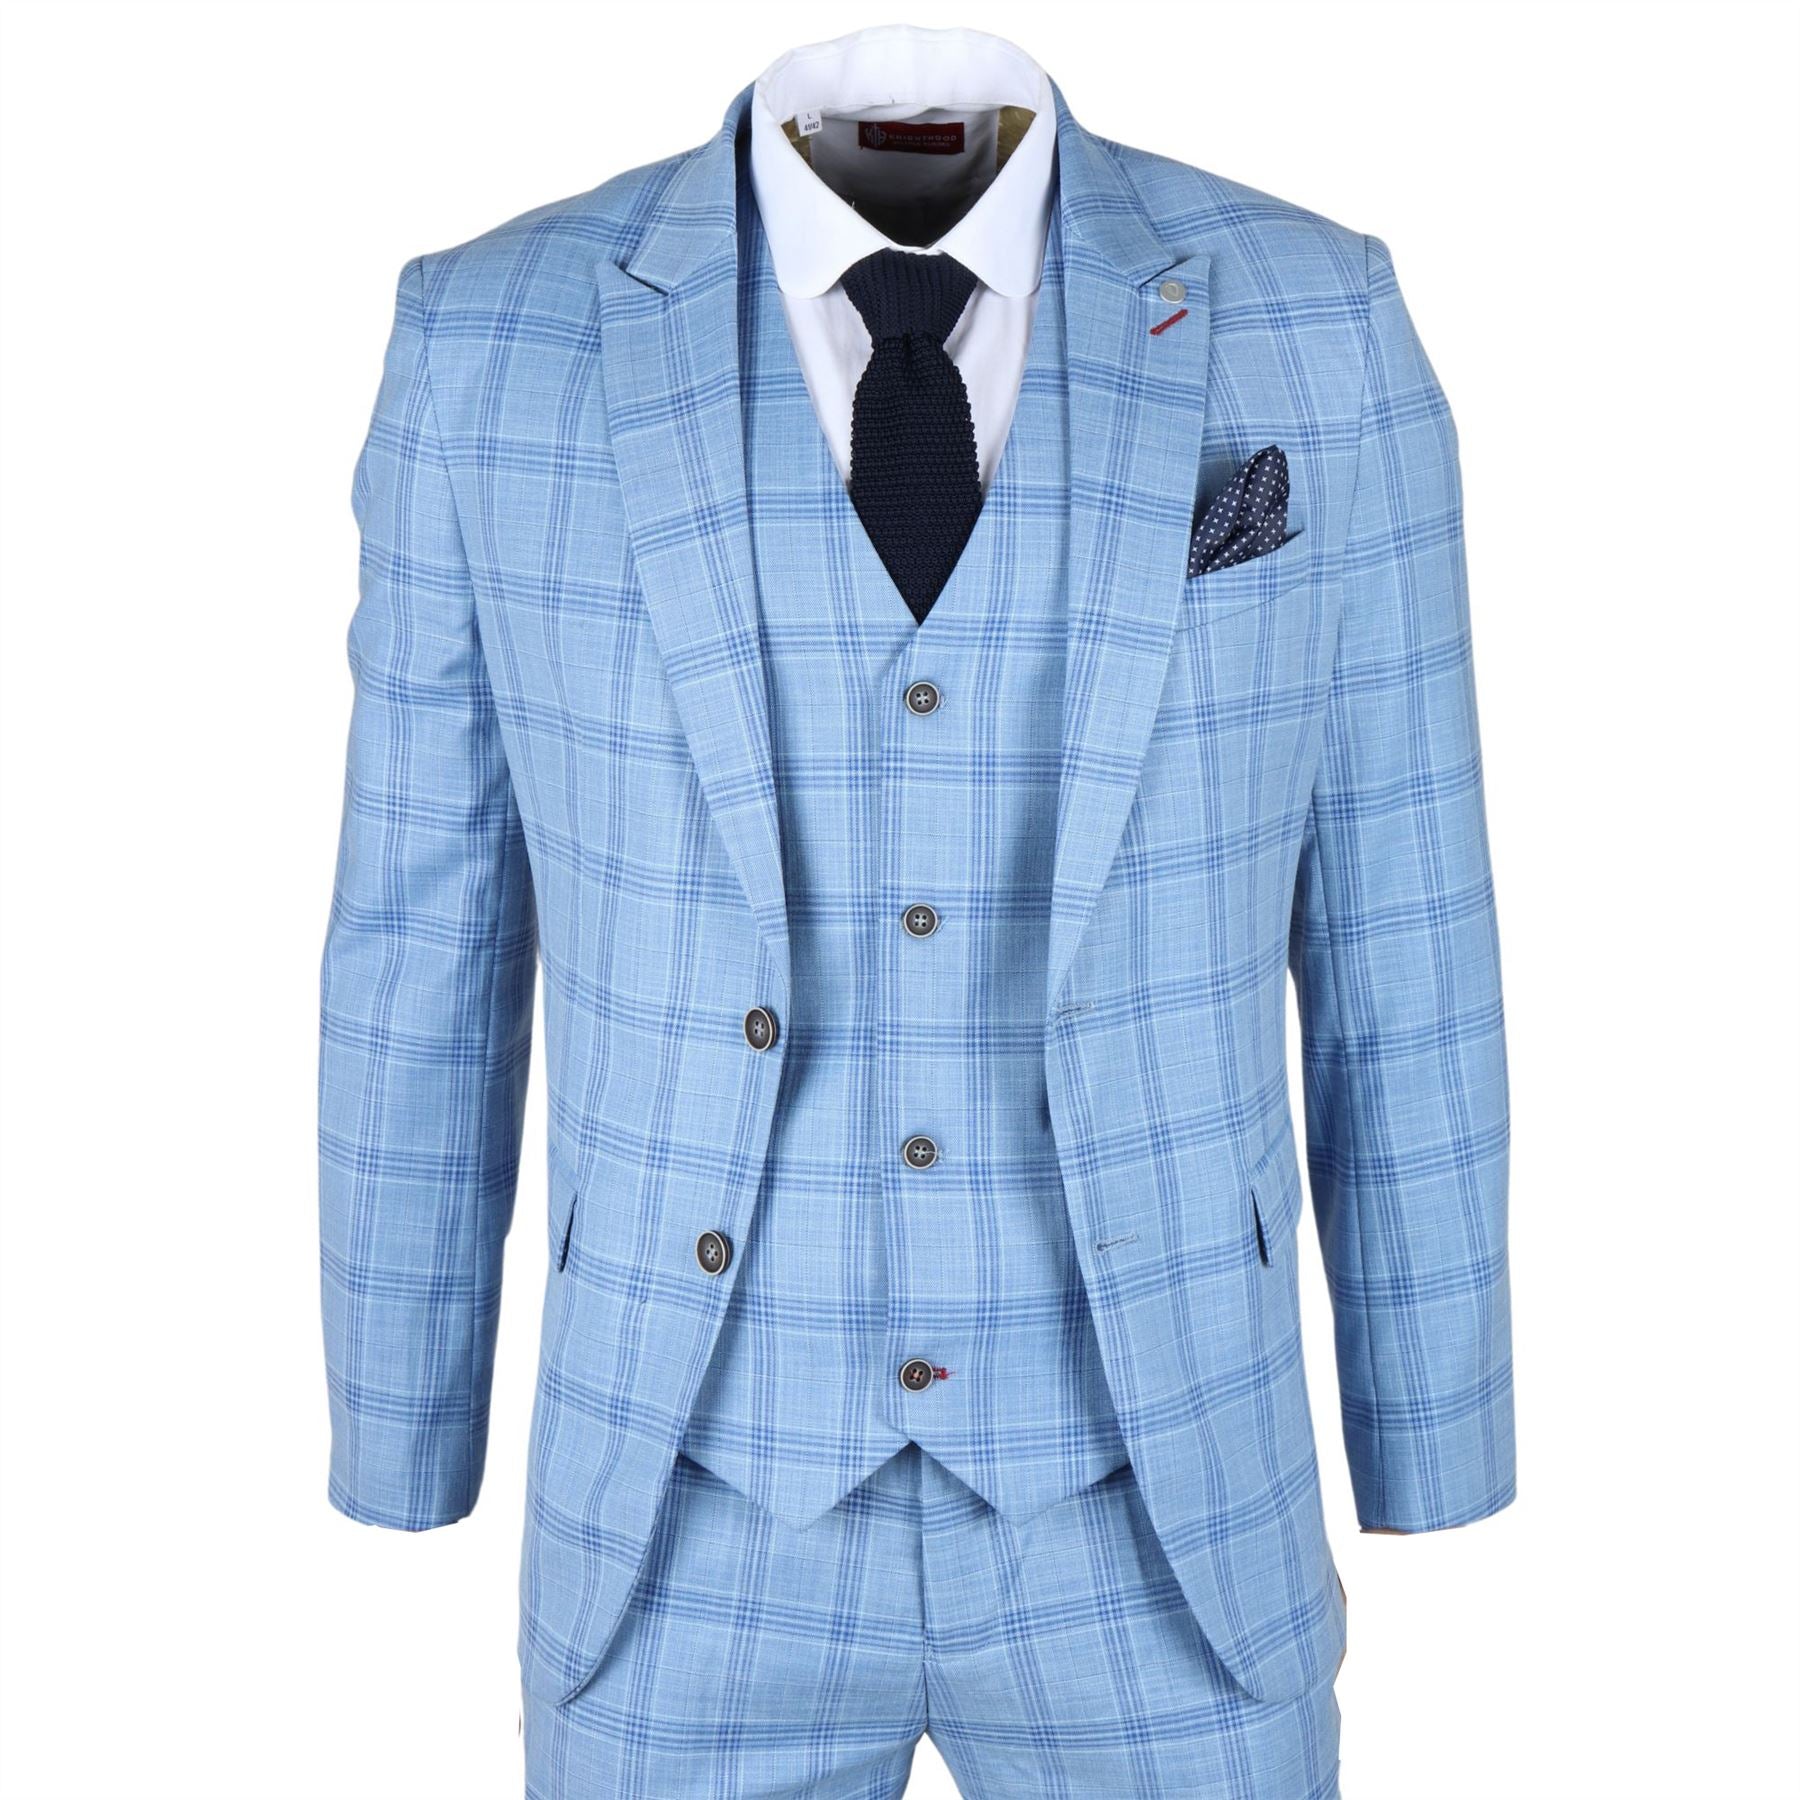 Men's Suit 3 Piece Light Blue Checked Classic Plaid Tailored Fit Formal Dress